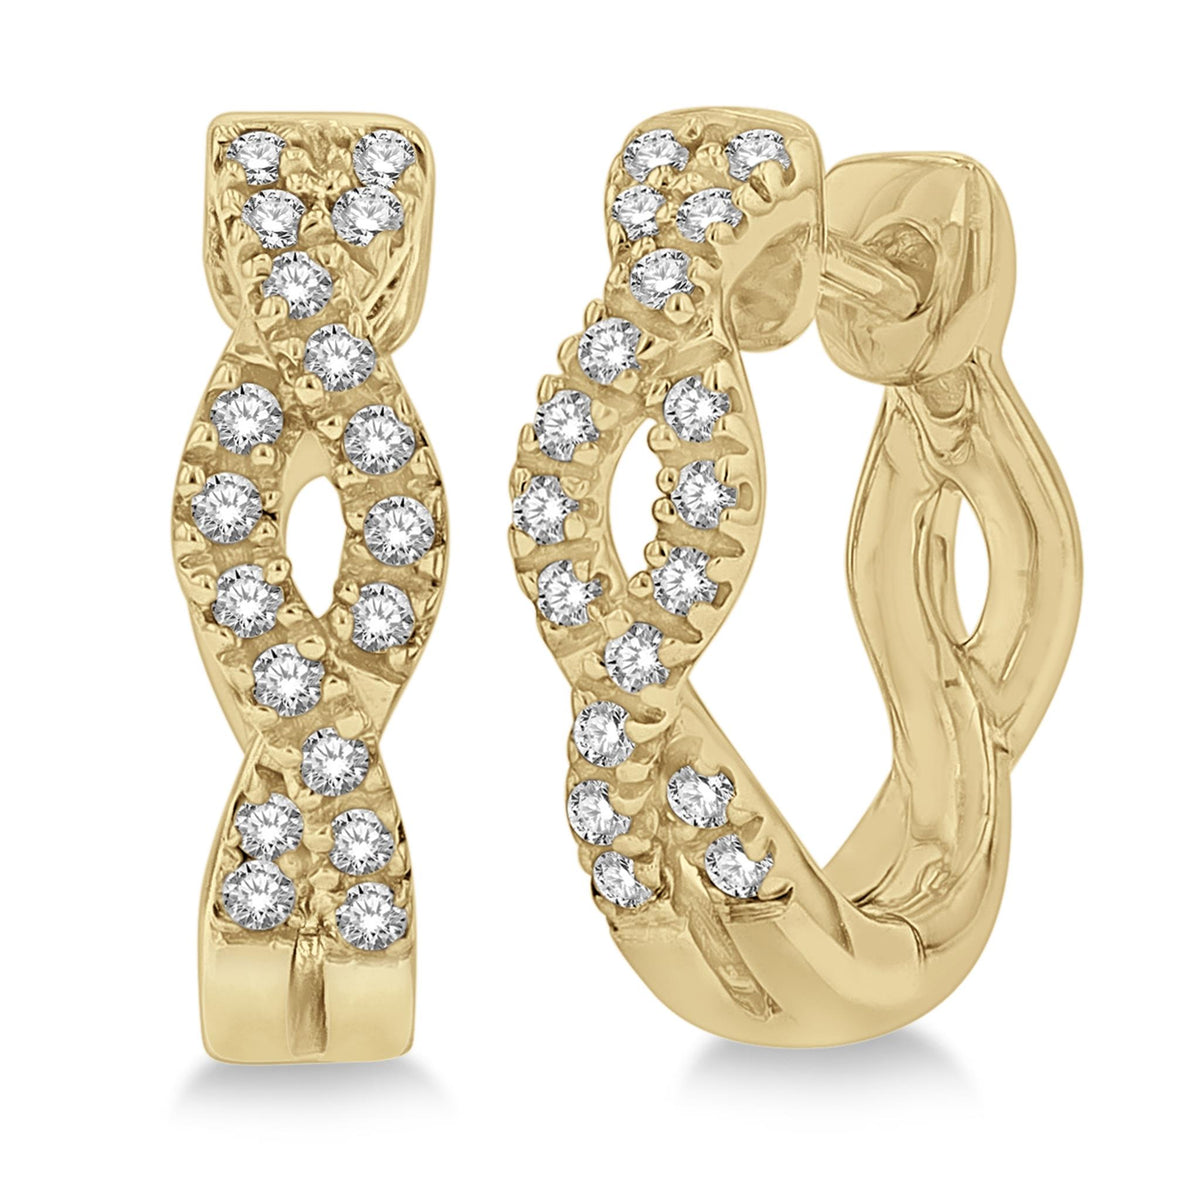 Lasker Petites-10Kt Yellow Gold Twisted Hoop Earrings 0.15cttw Natural Diamonds